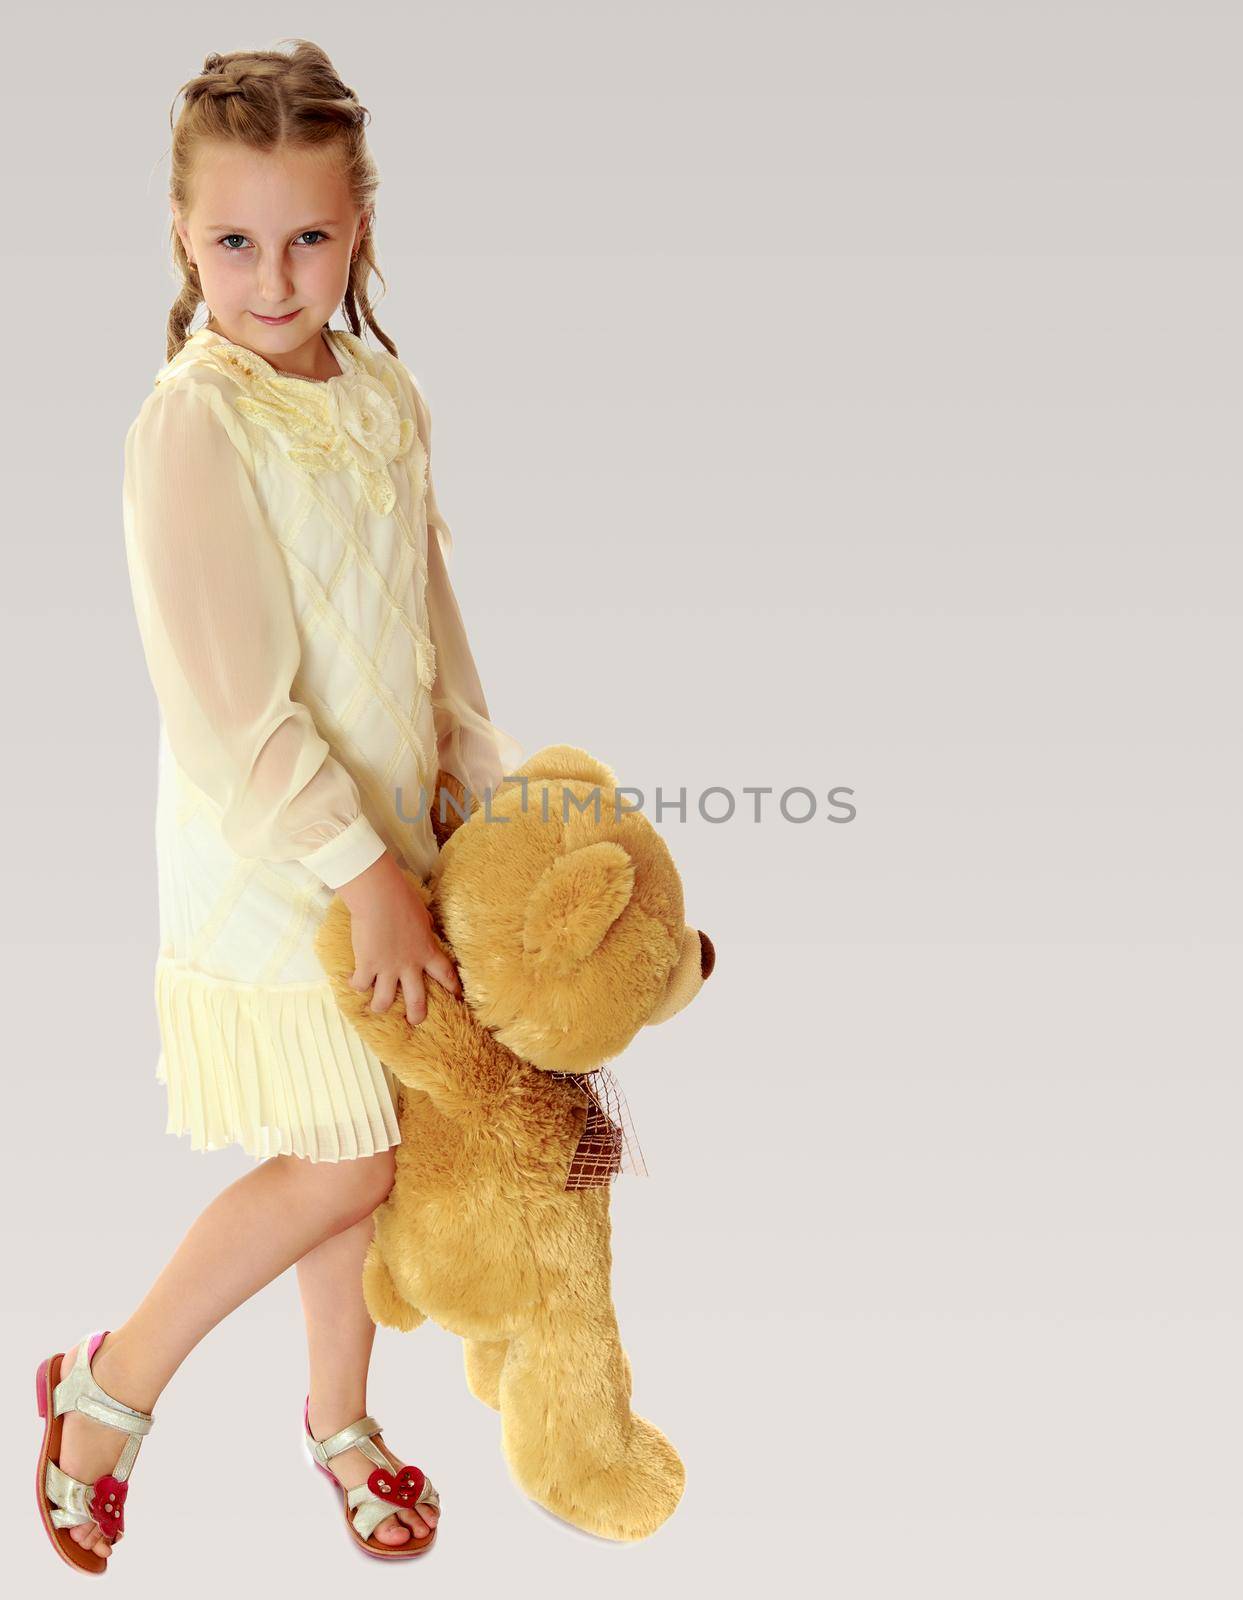 Beautiful little girl with a Teddy bear by kolesnikov_studio